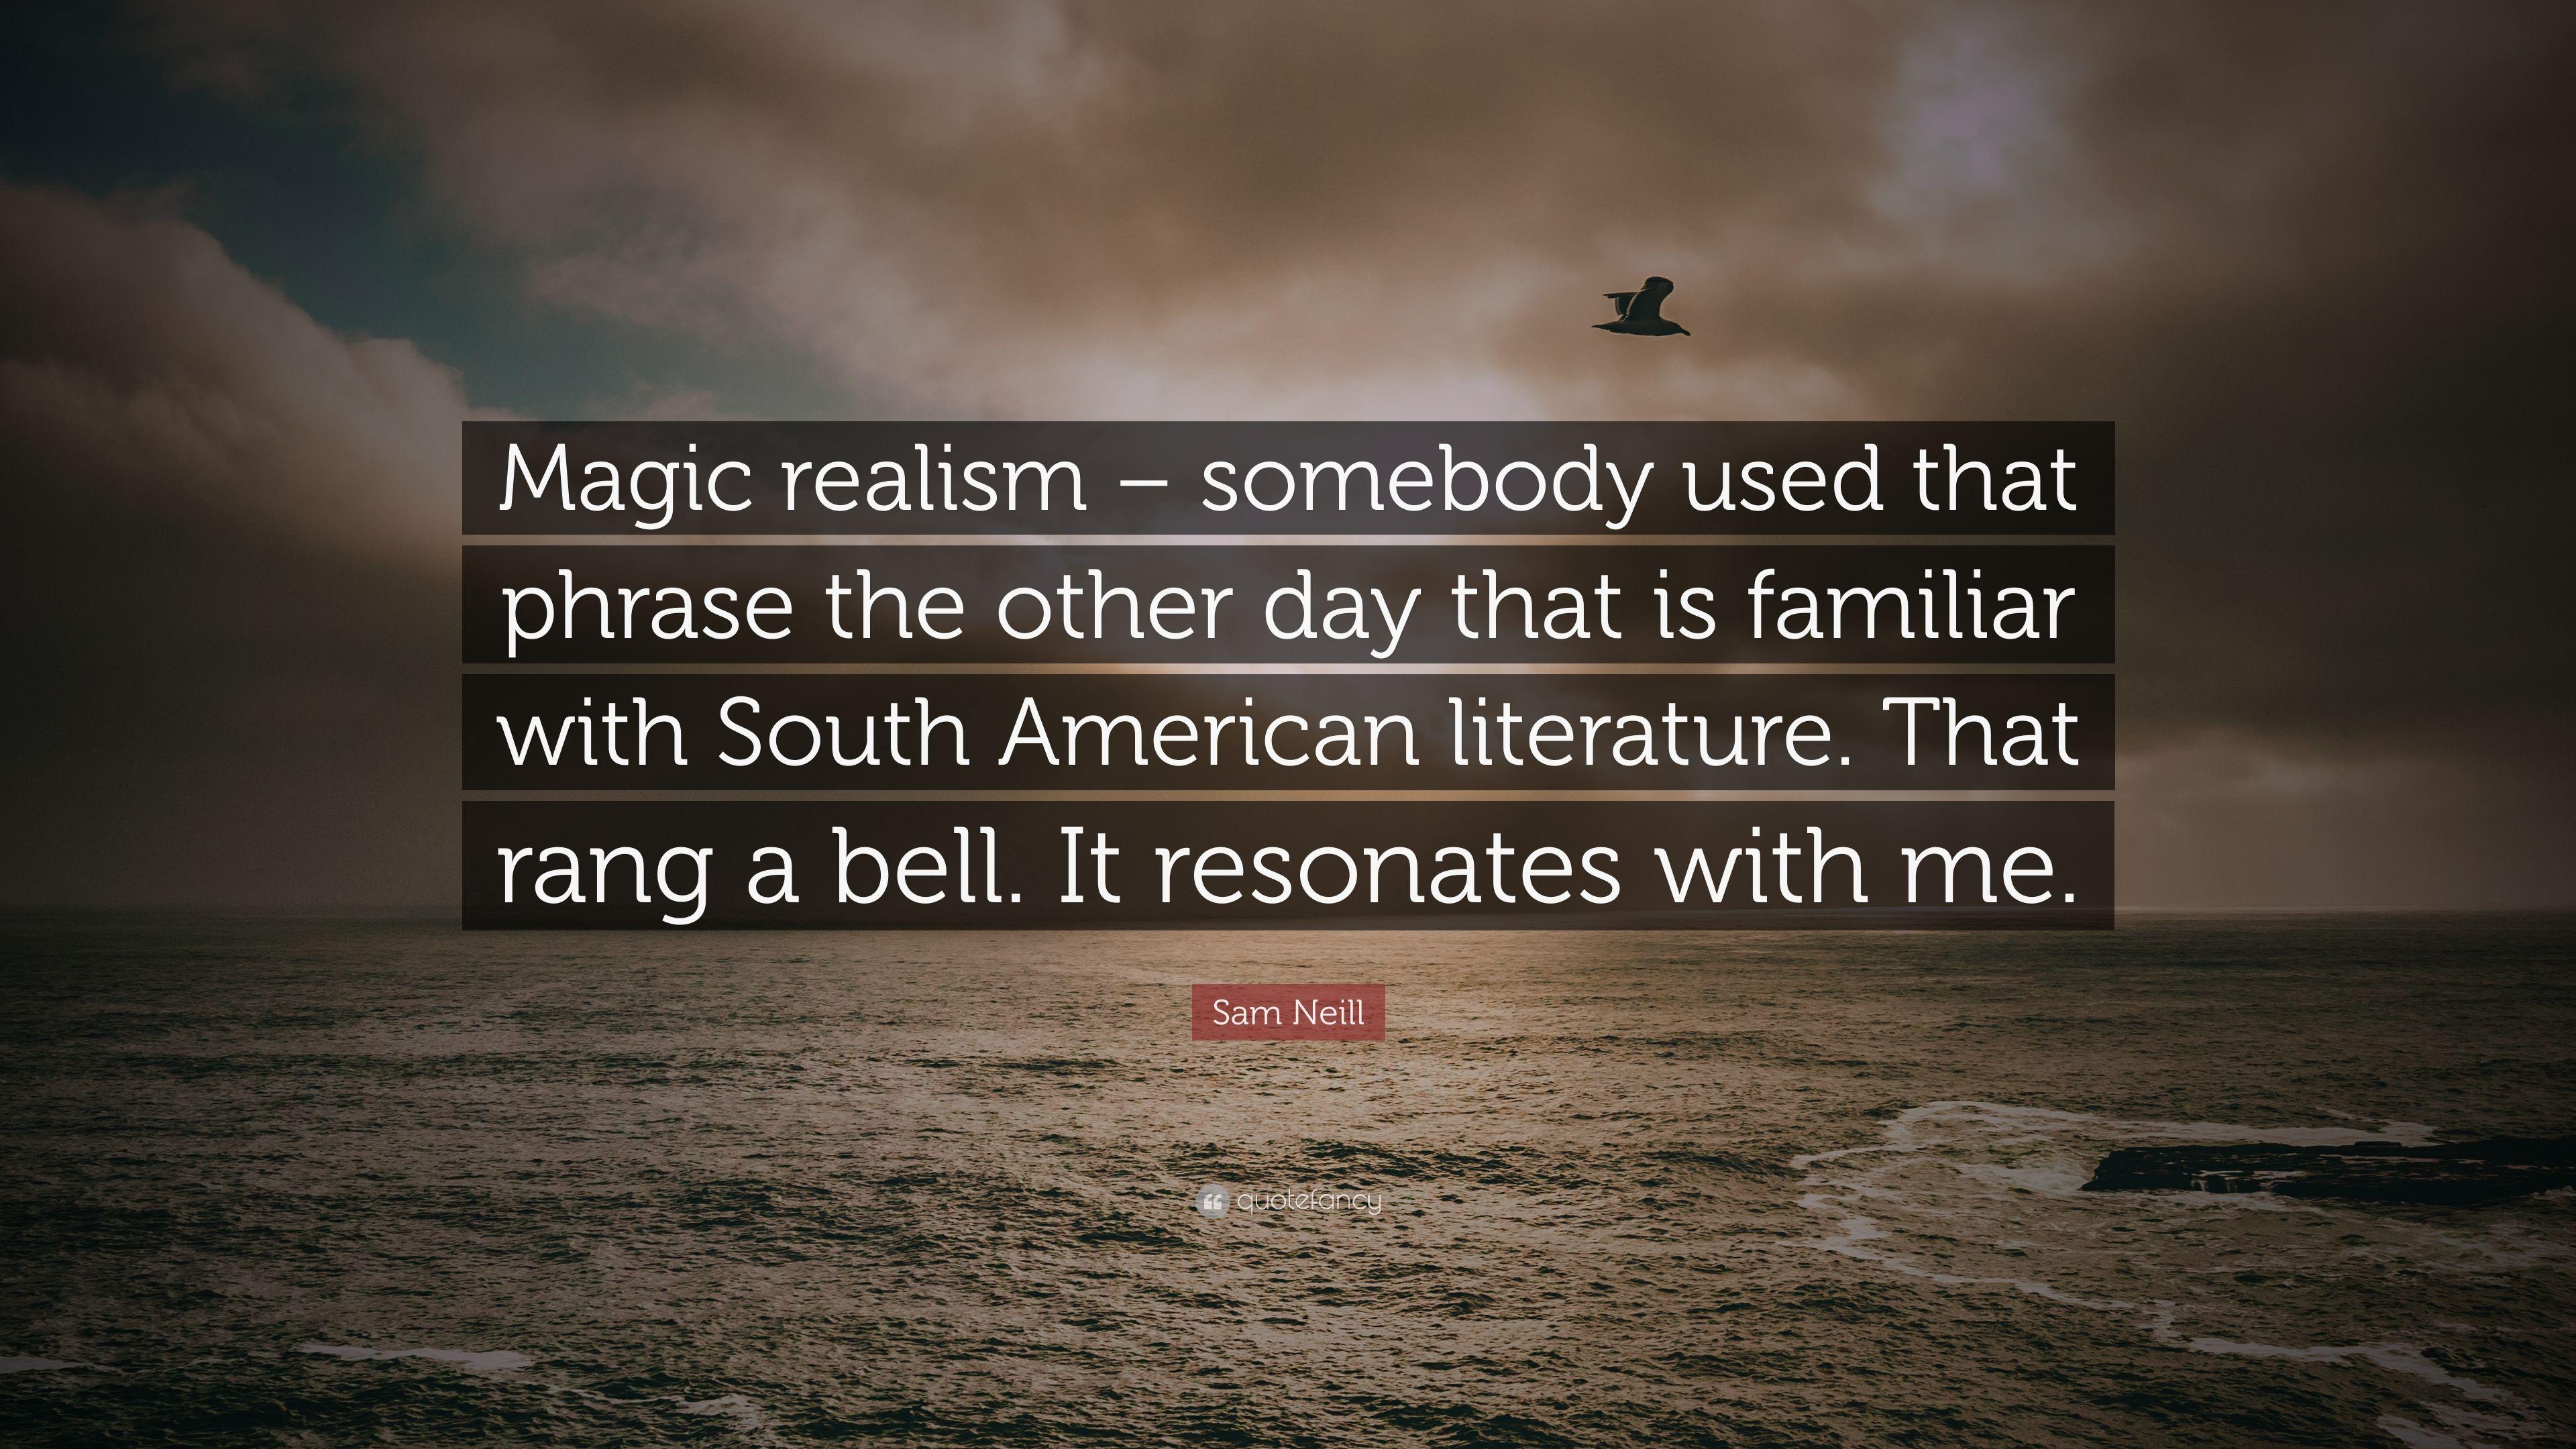 Sam Neill Quote: “Magic realism